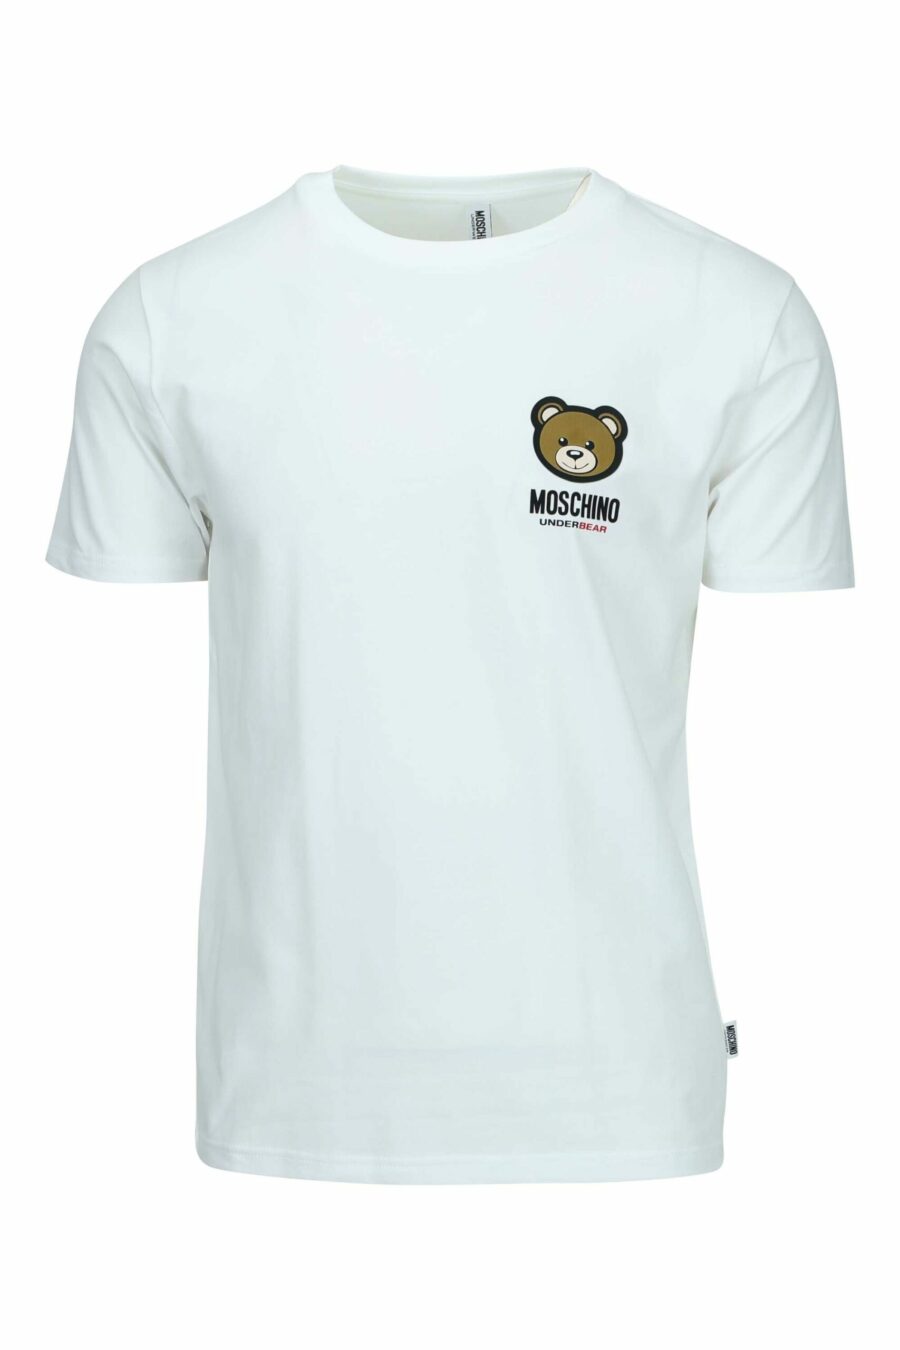 Camiseta blanca con minilogo parche oso "underbear" - 667113605678 scaled